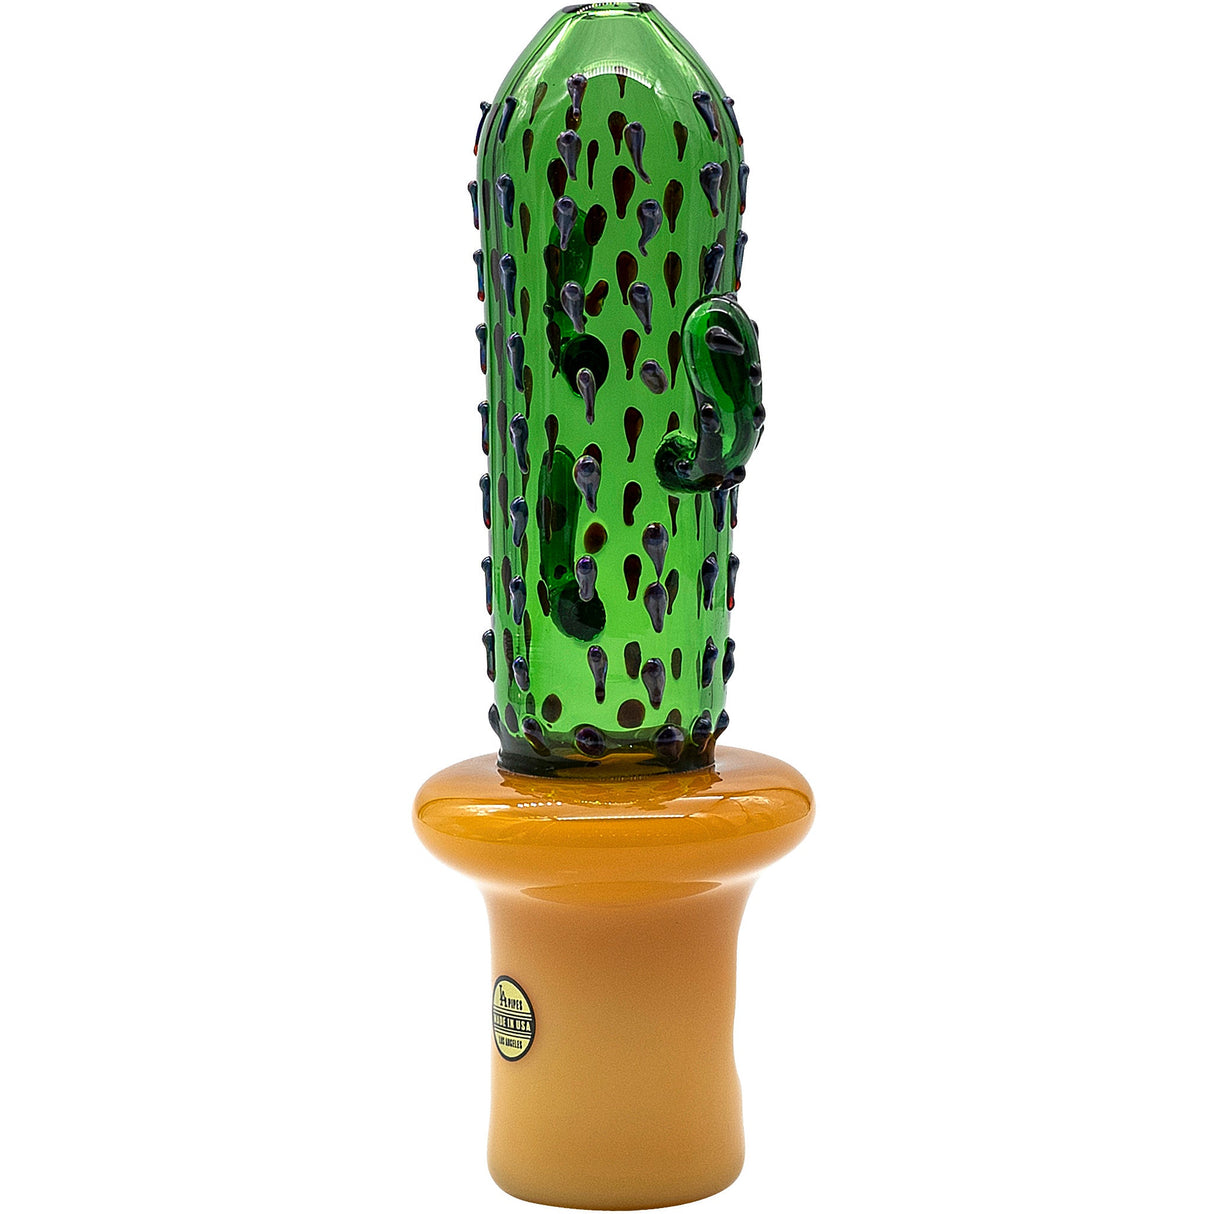 LA Pipes Glass Saguaro Cactus Pipe